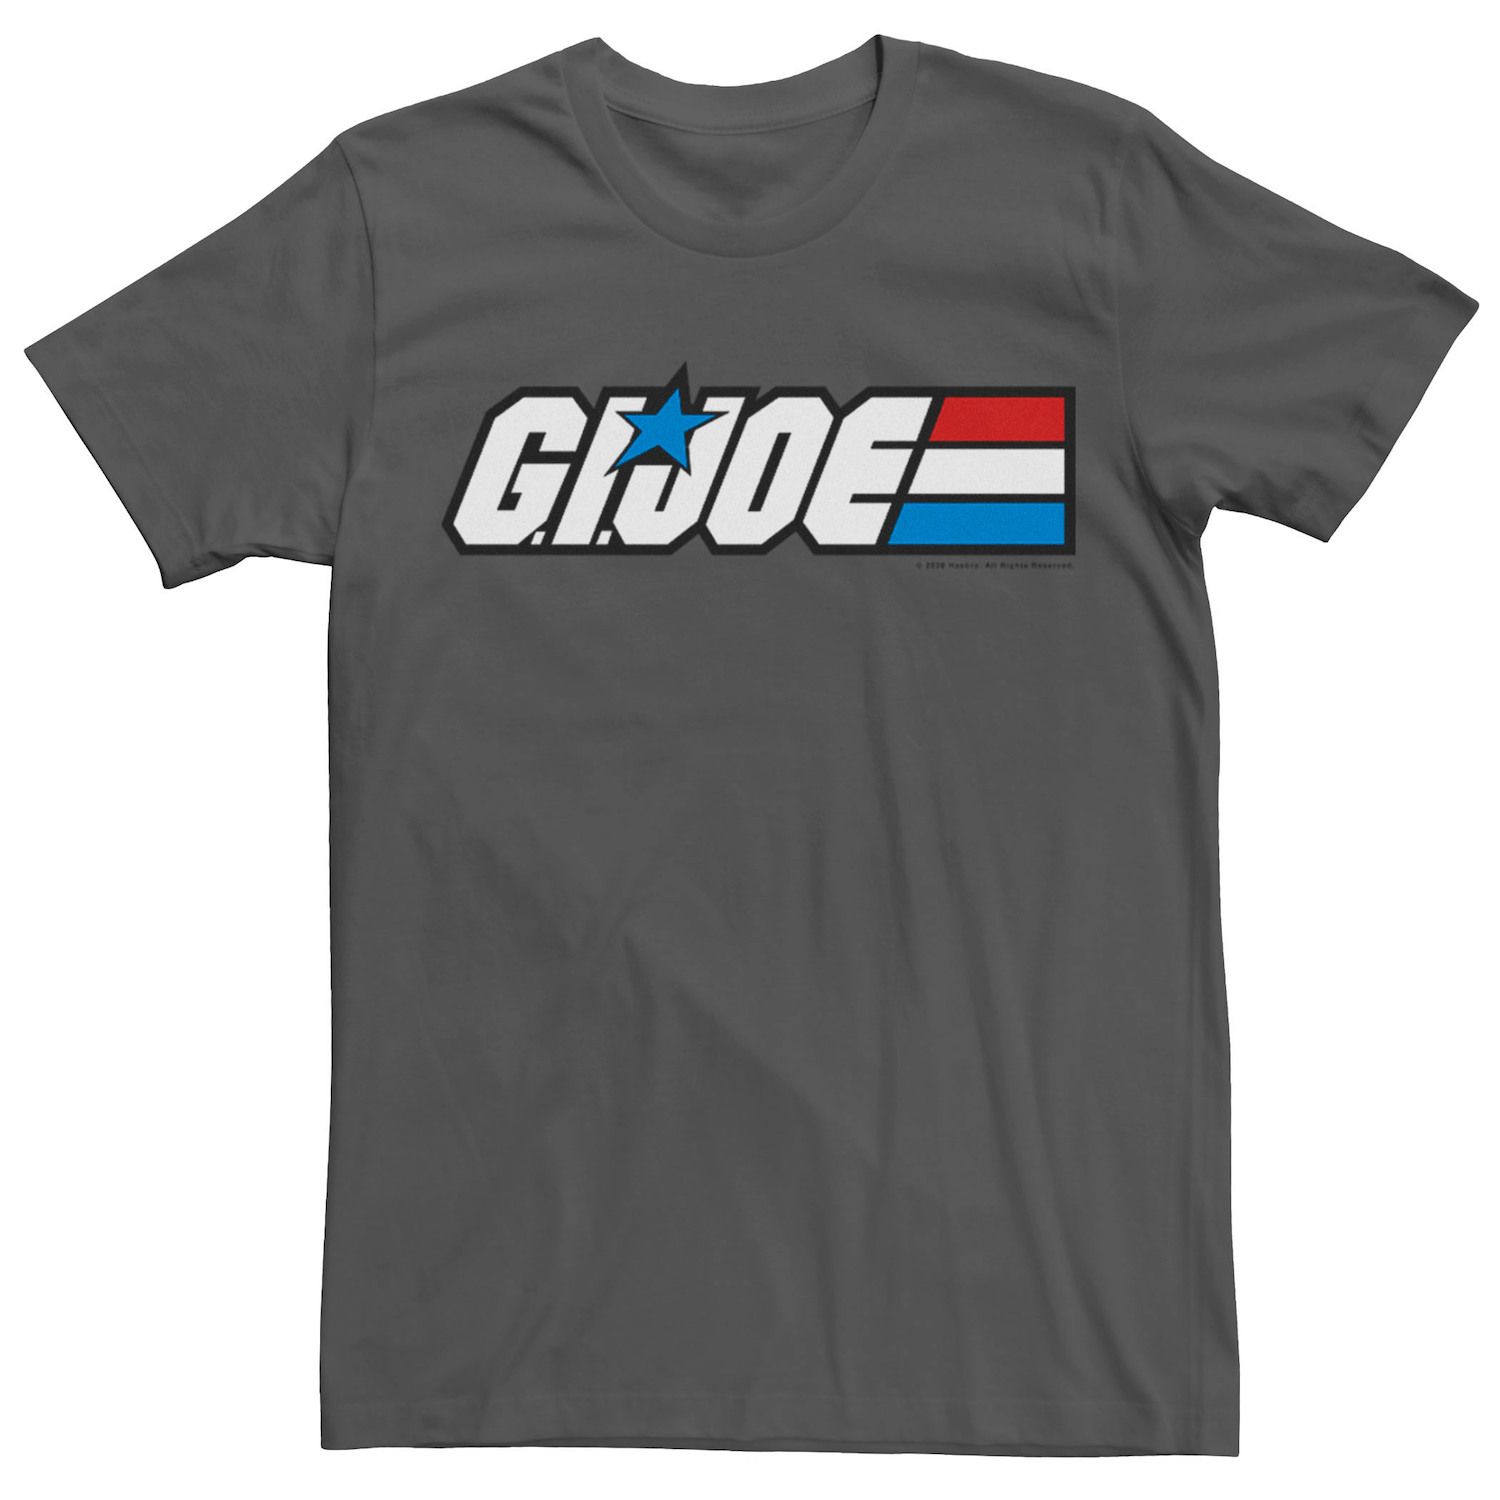 Мужская футболка с простым логотипом GI Joe Licensed Character